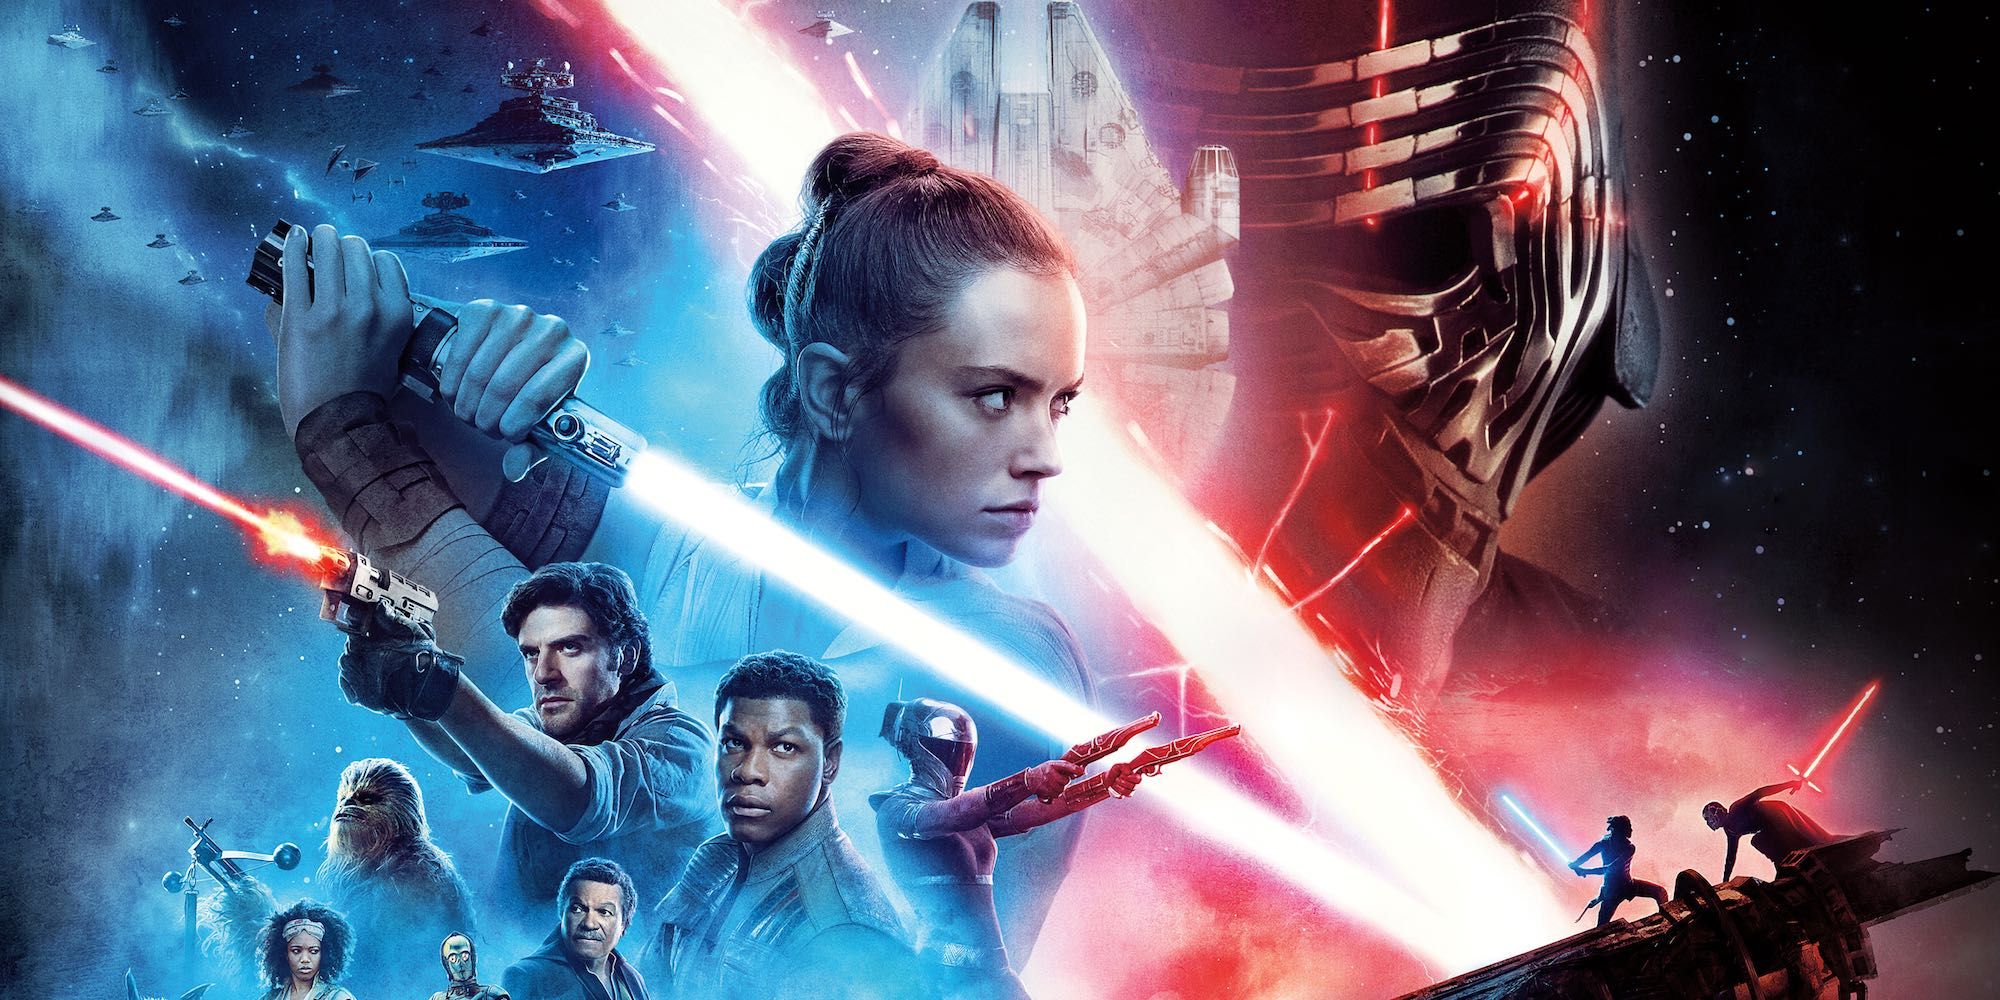 2019 Star Wars: The Rise Of Skywalker